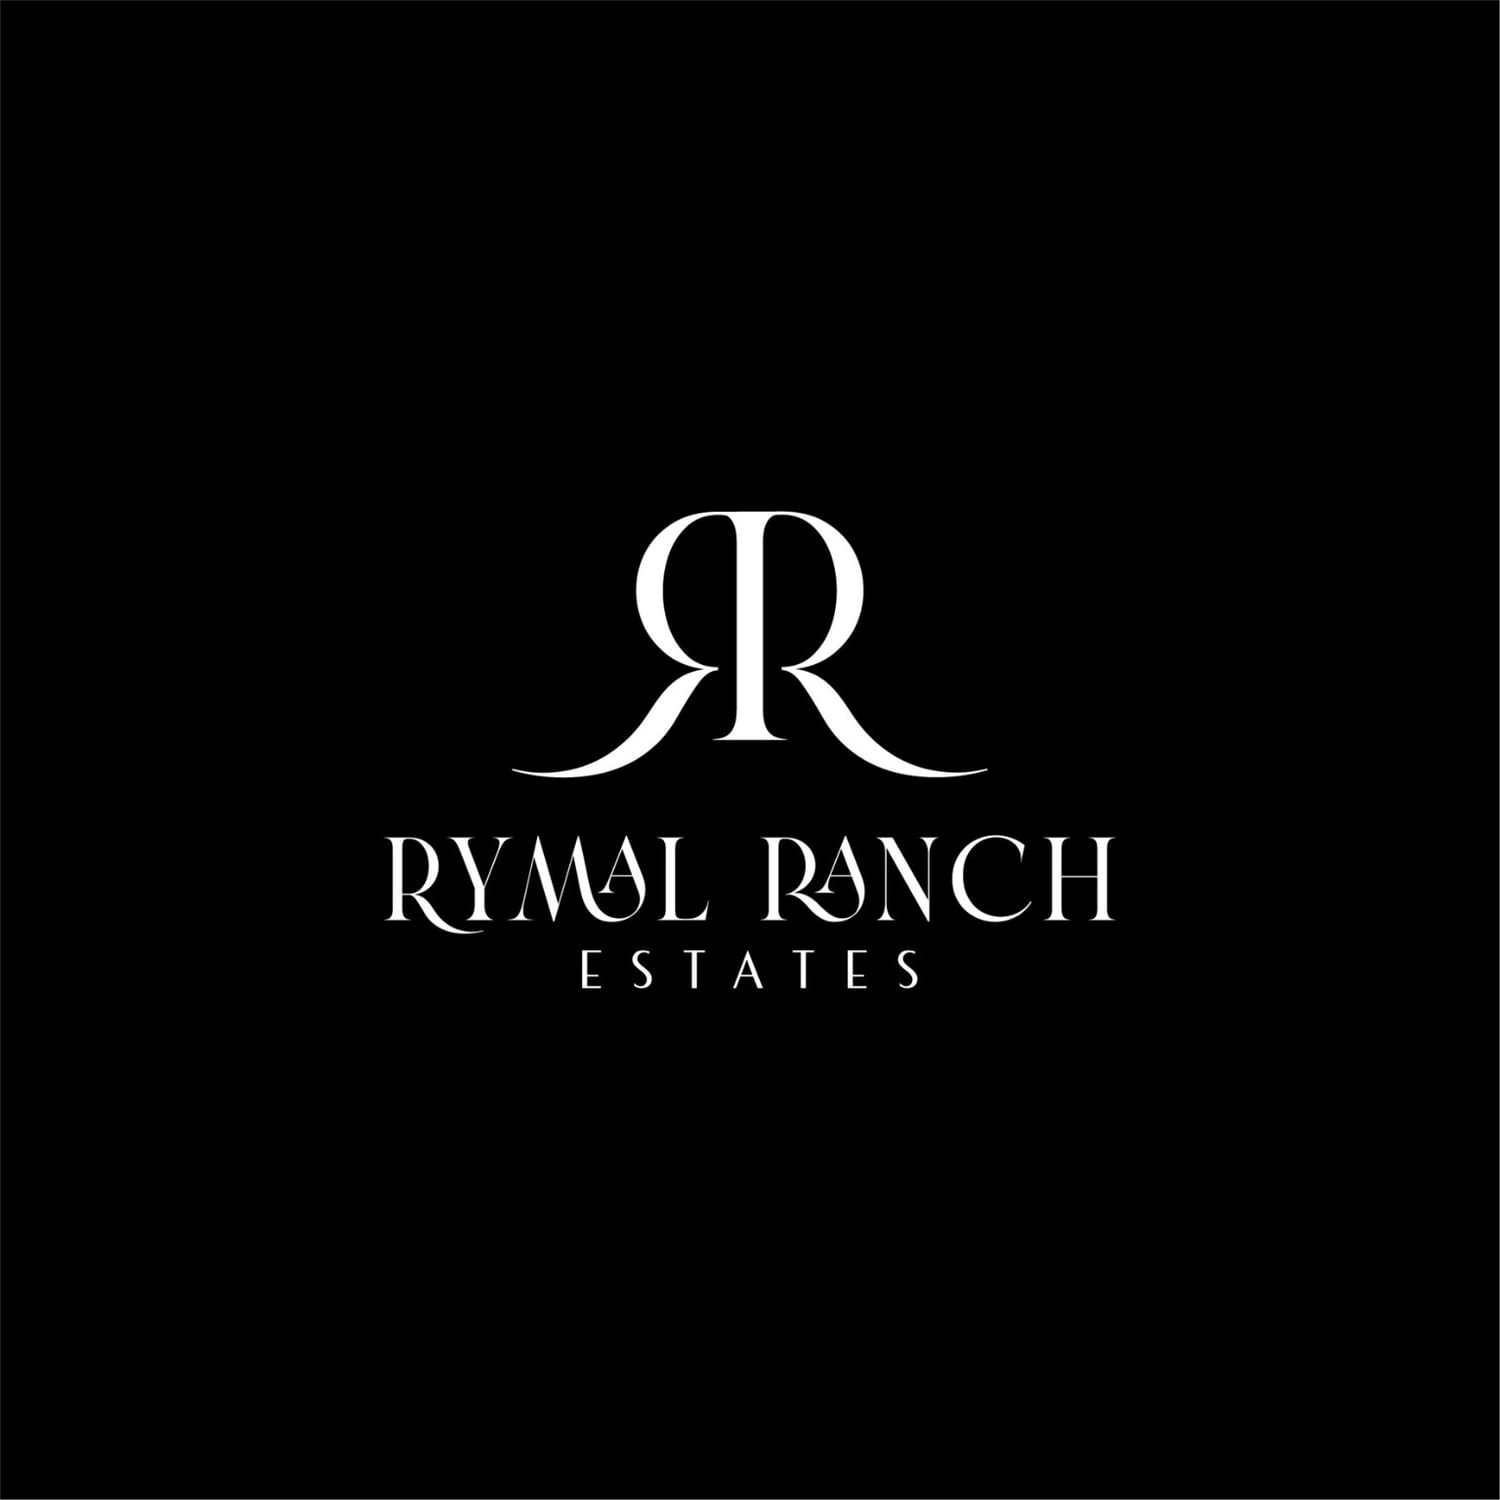 Real estate property located at 000 Rymal Ranch Road, Galveston, Rymal Ranch Estates, Algoa, TX, US